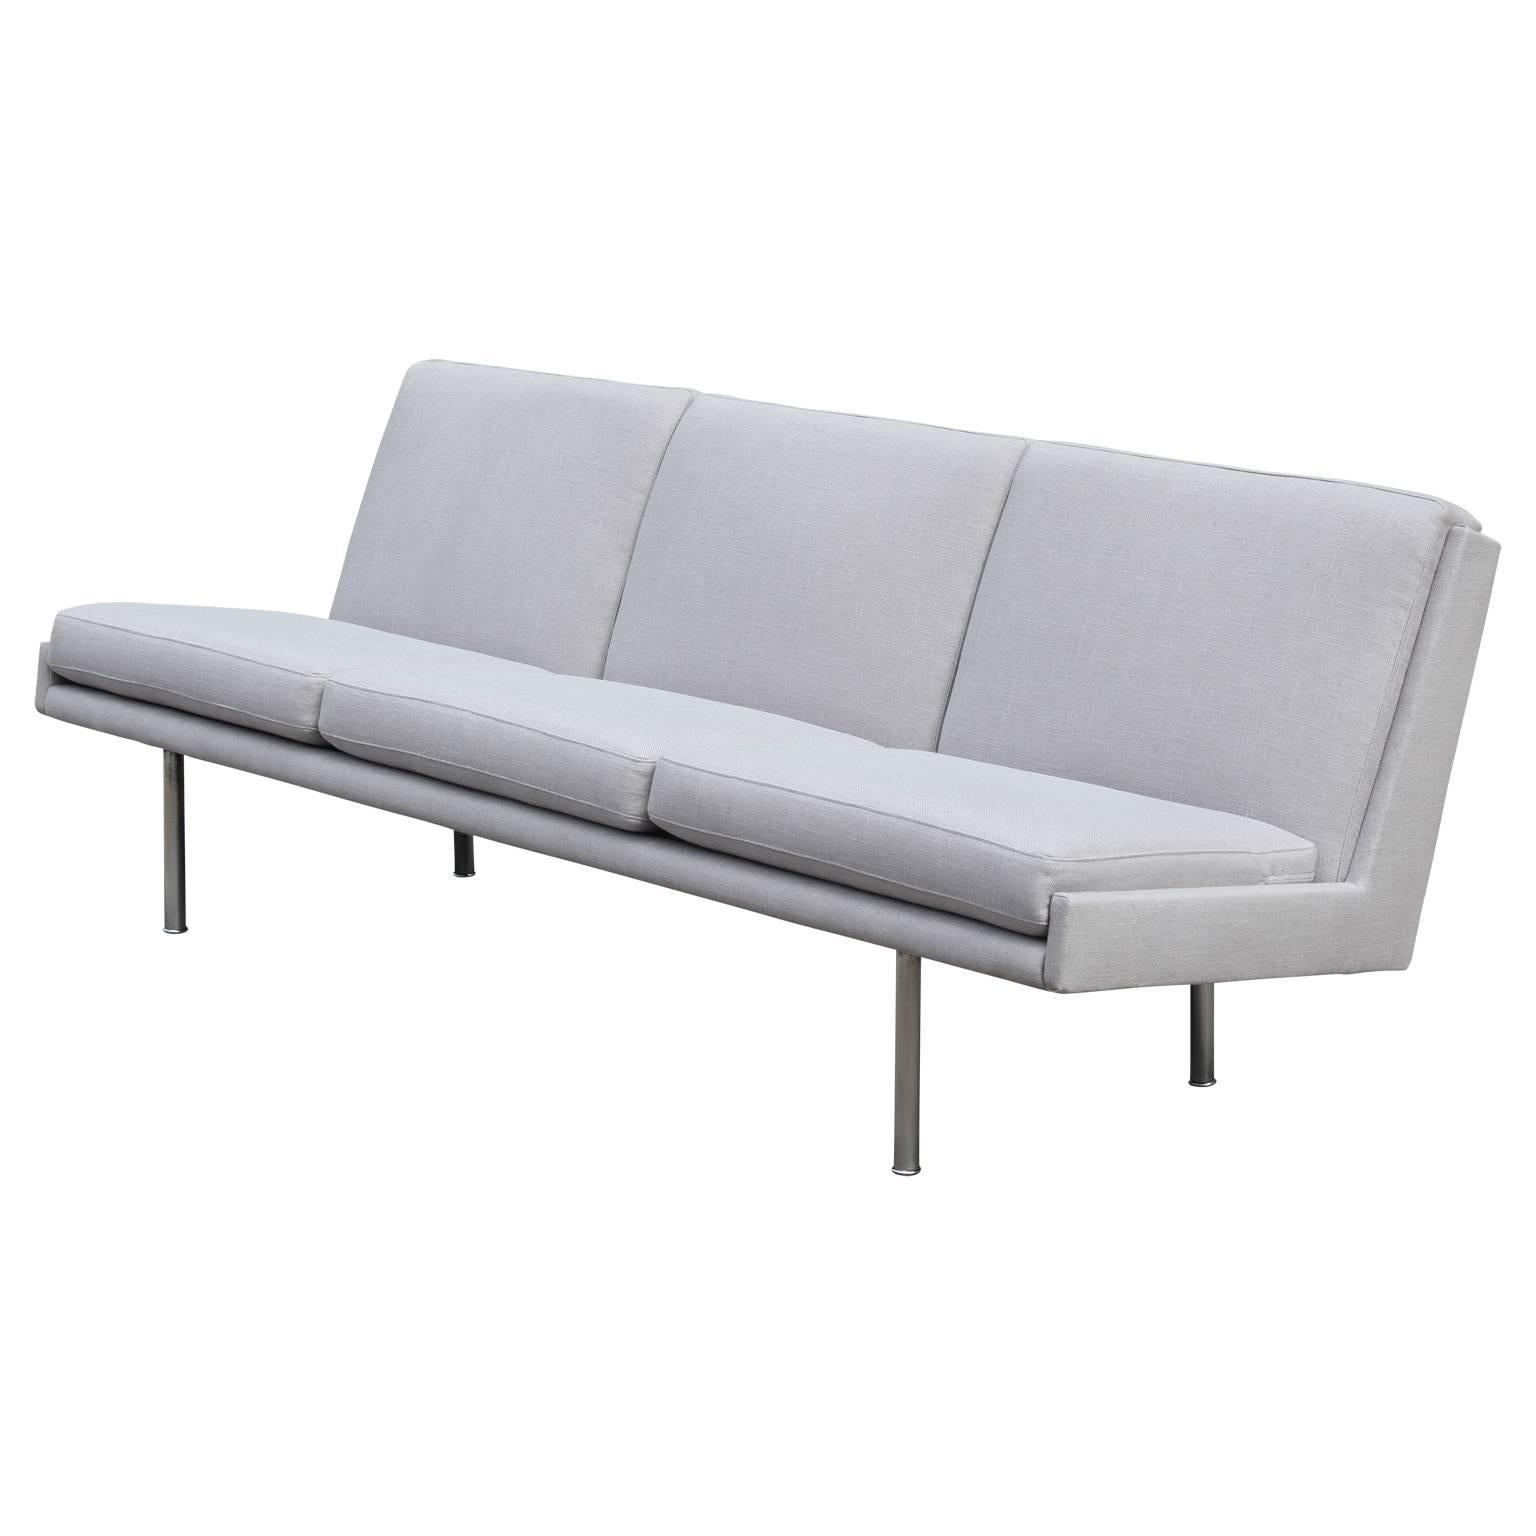 Rare Hans Wegner Armless Three-Seat Sofa with Steel Legs in Light Grey Fabric